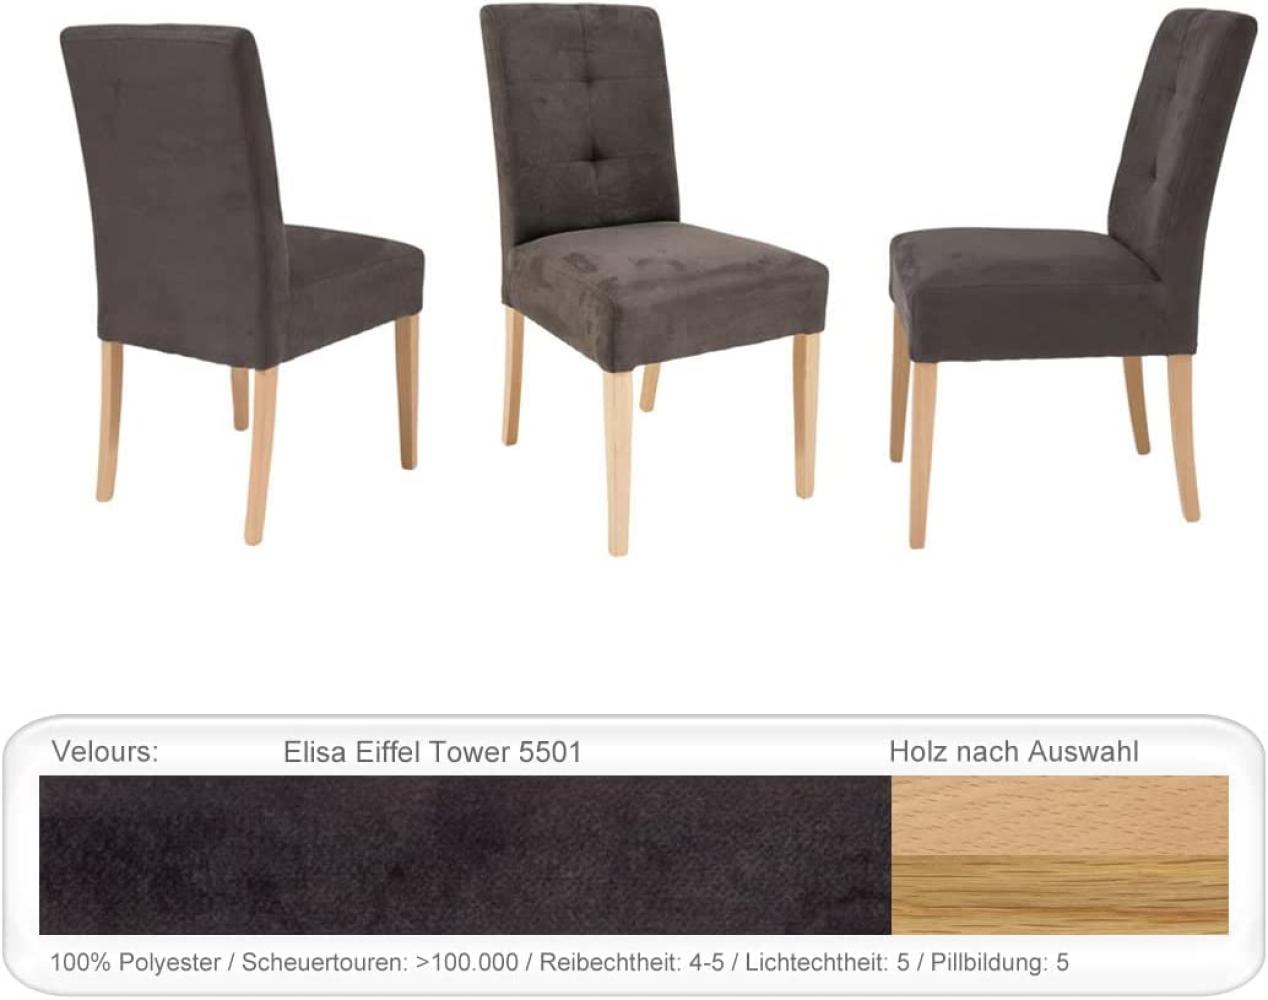 6x Stuhl Agnes 2 Varianten Polsterstuhl Esszimmerstuhl Massivholzstuhl Eiche natur lackiert, Elisa Eiffel Tower Bild 1